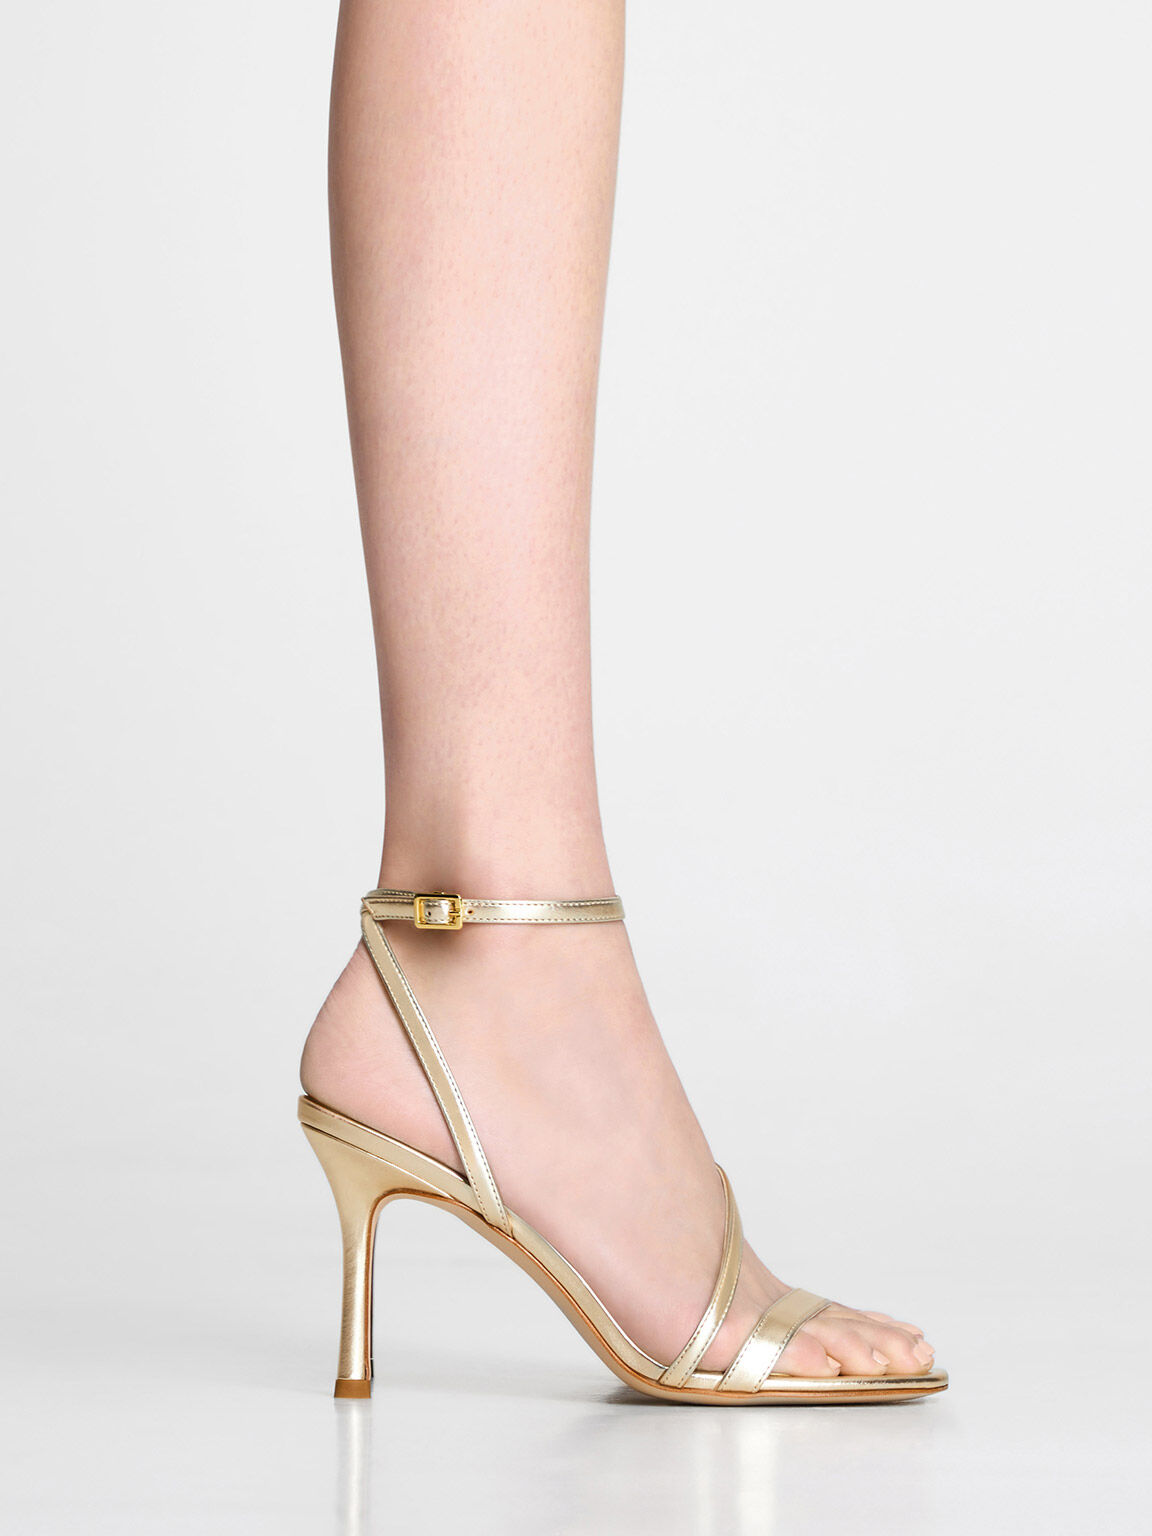 Metallic Asymmetric Strappy Heeled Sandals, Gold, hi-res